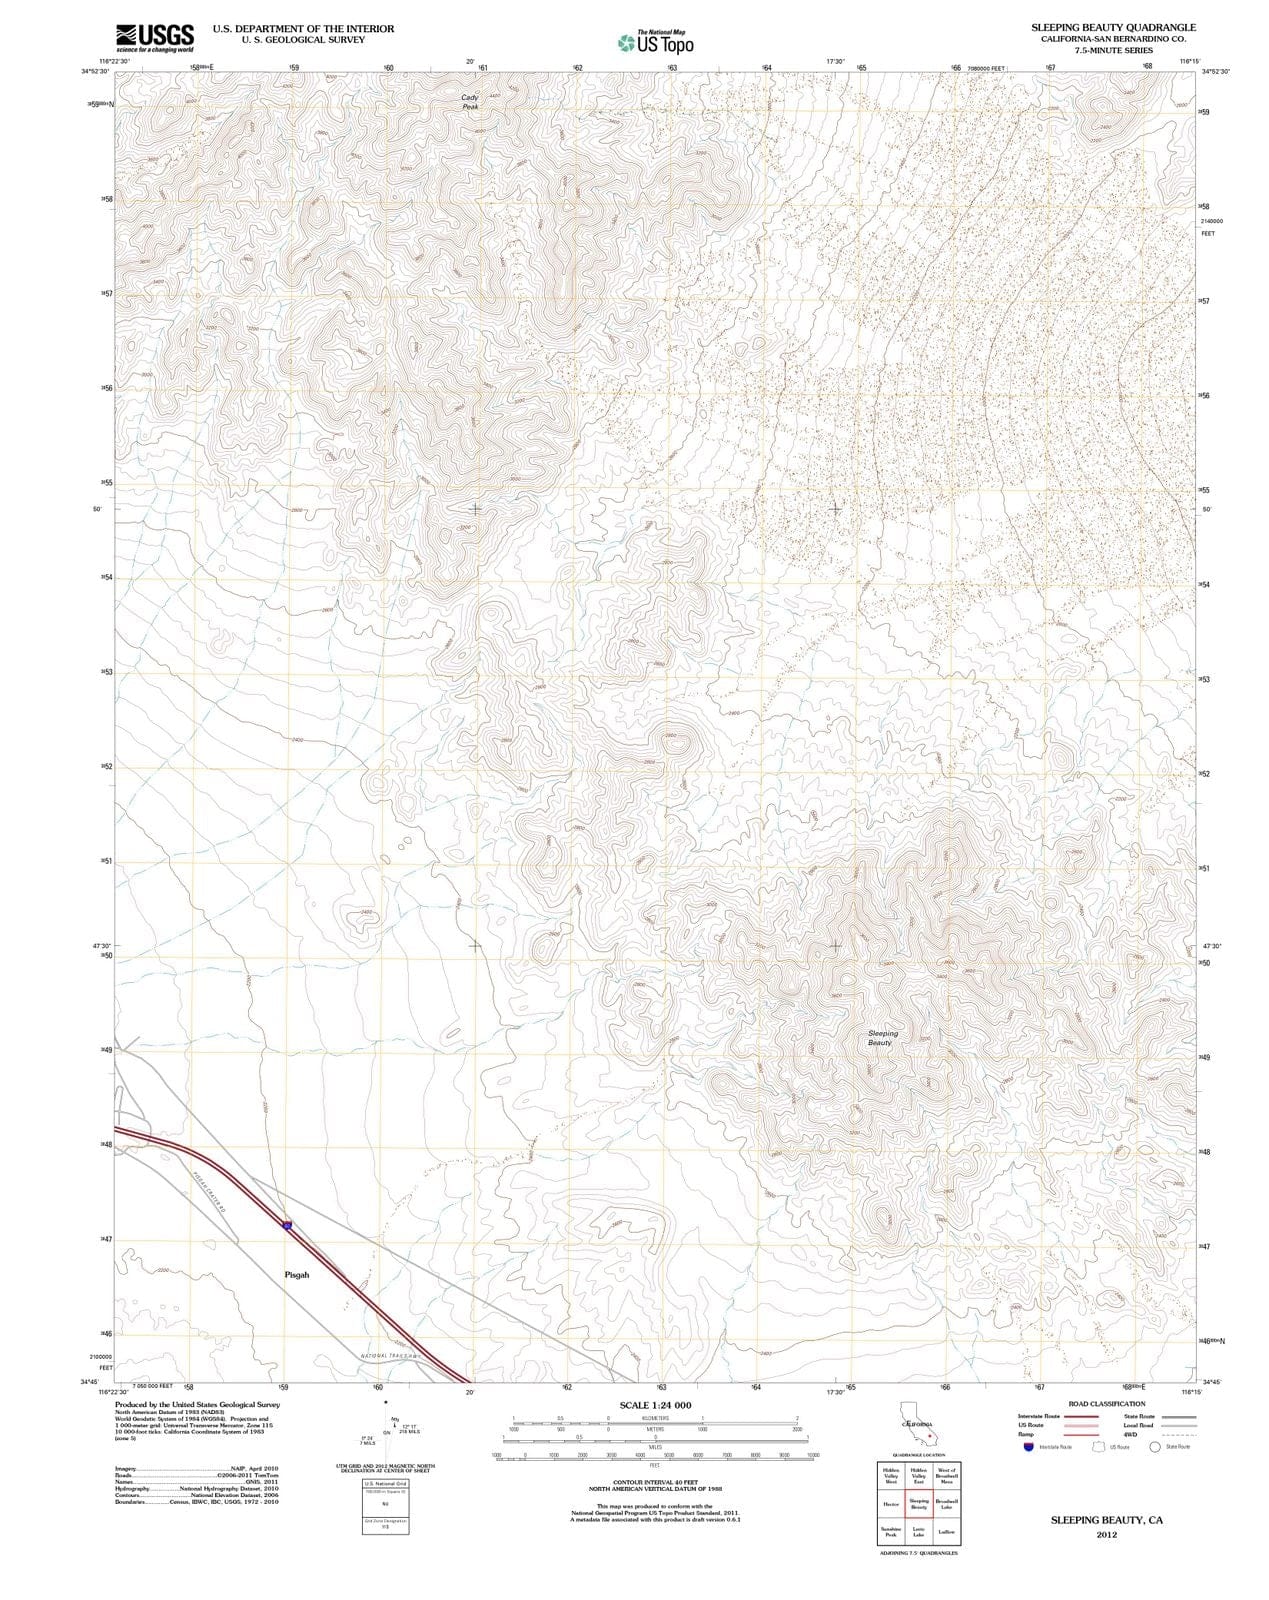 2012 Sleeping Beauty, CA - California - USGS Topographic Map